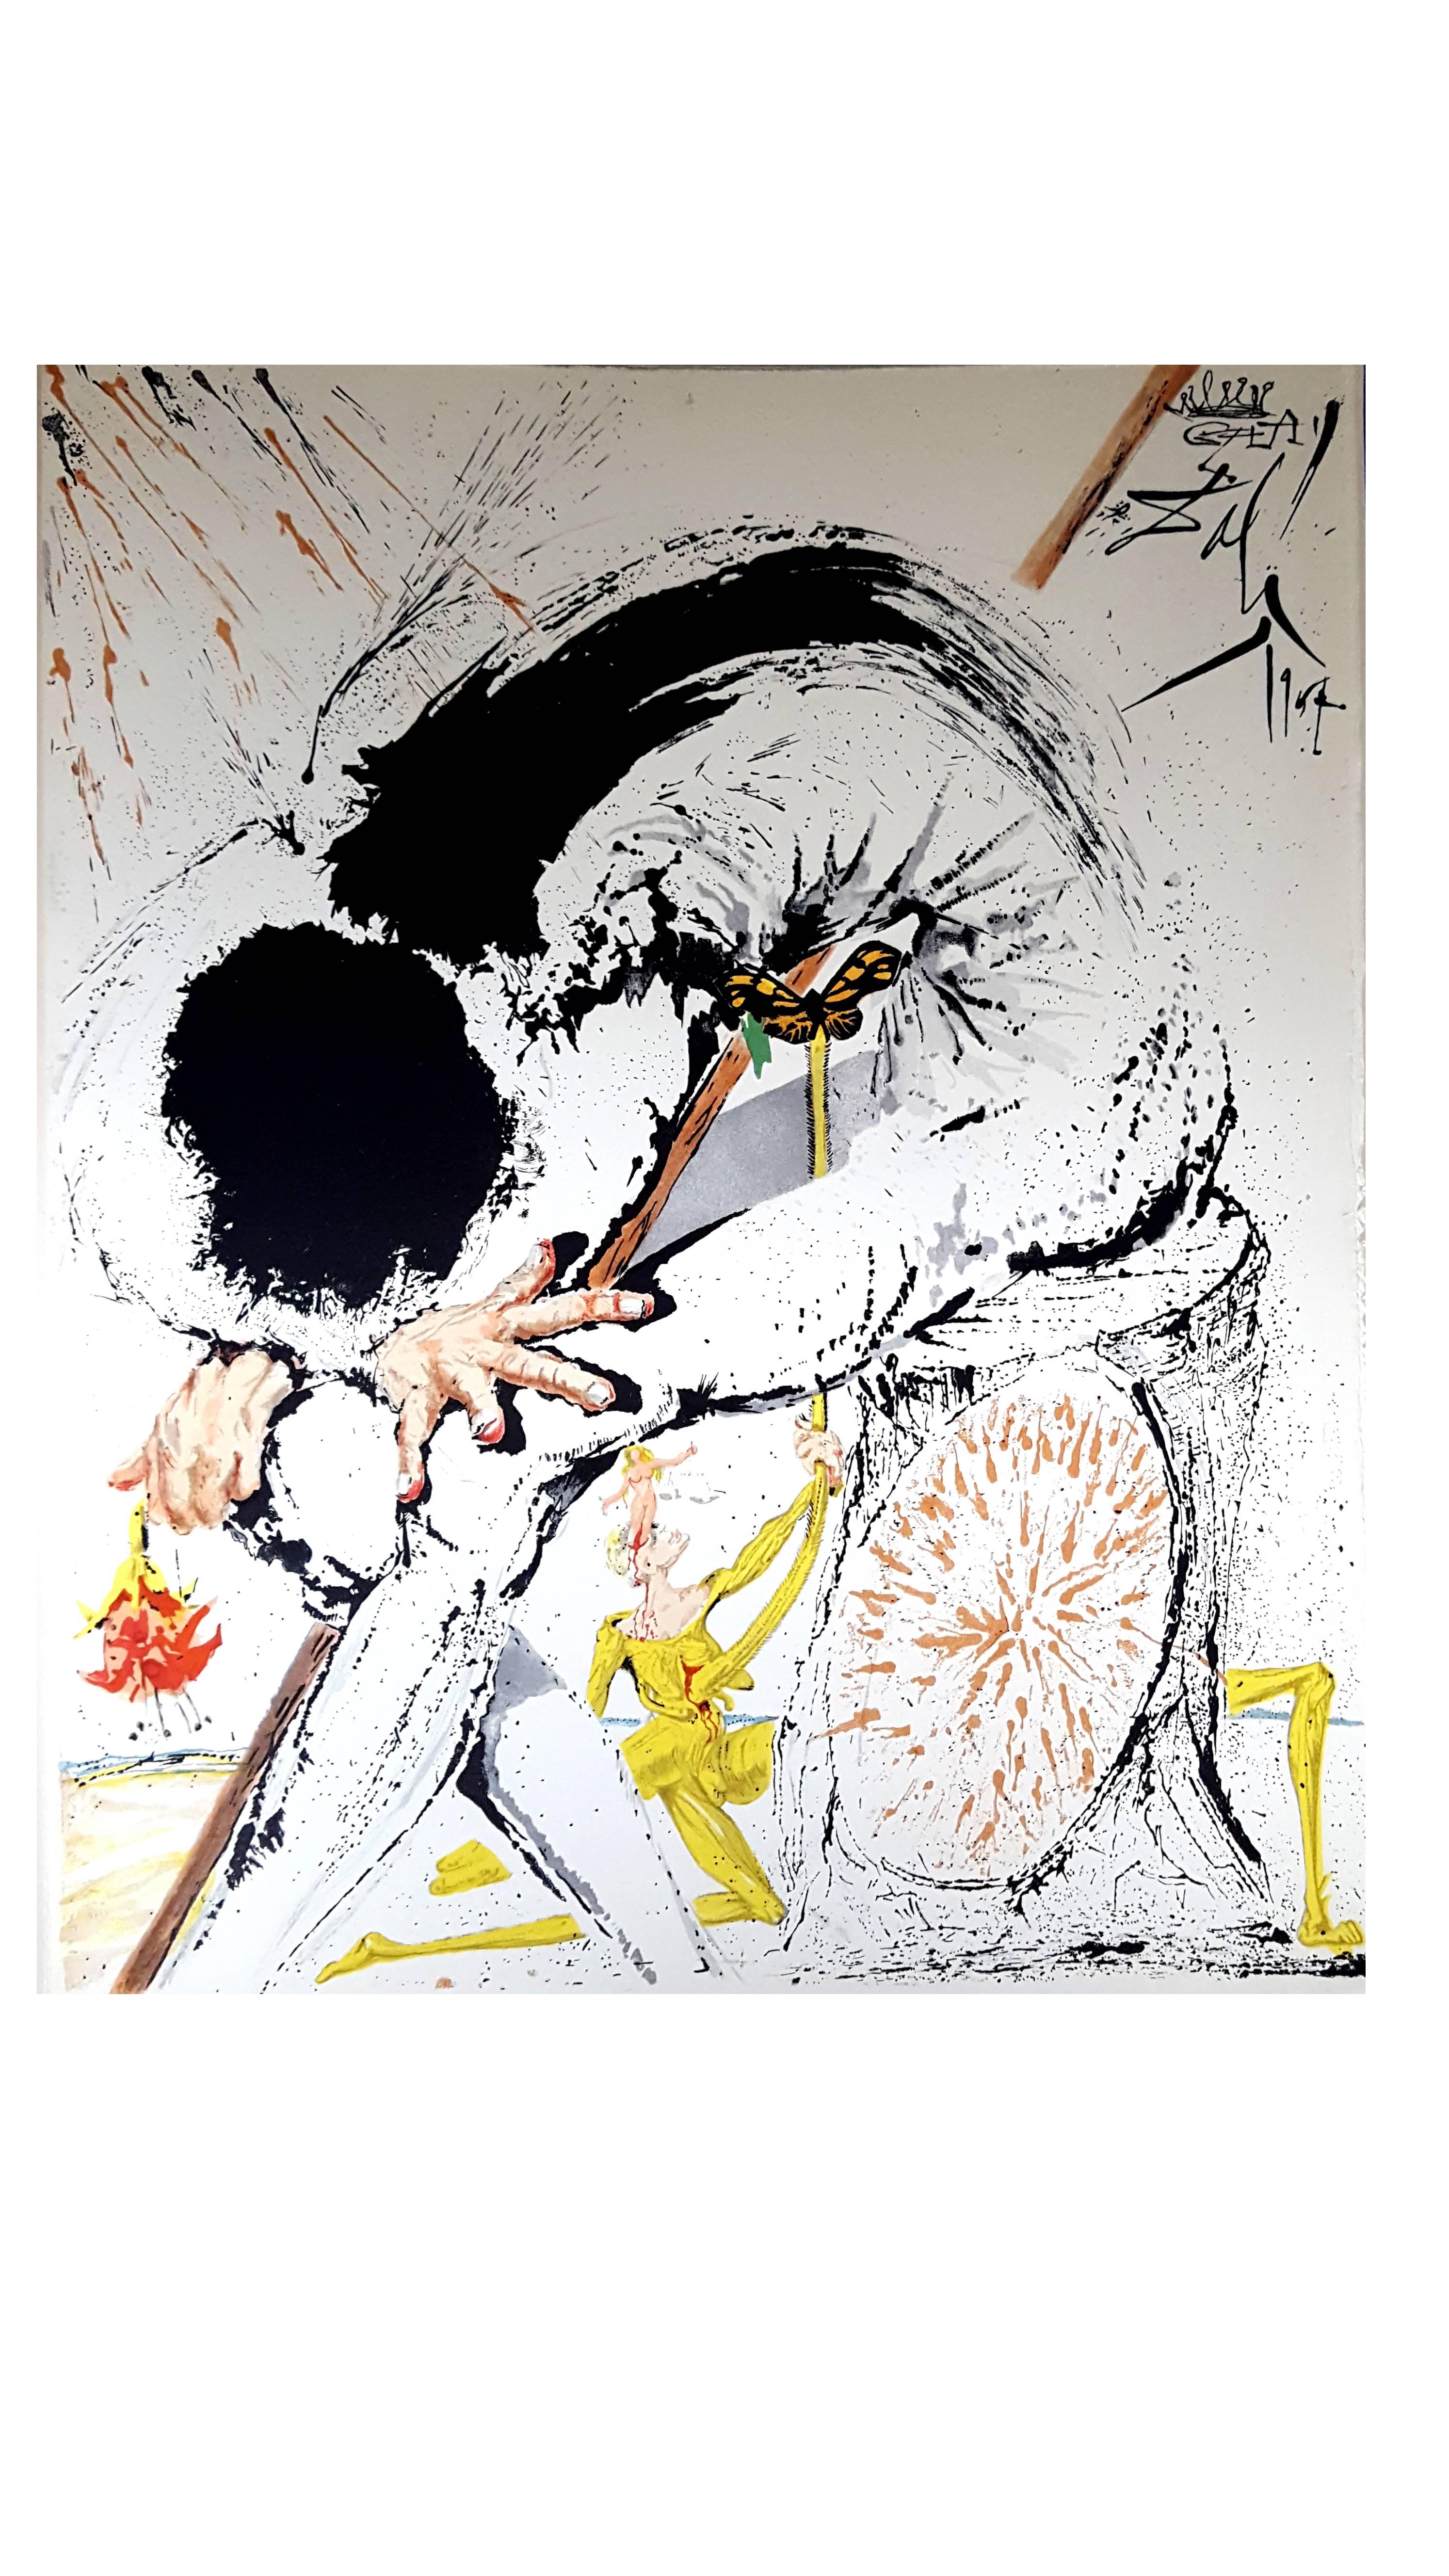 Salvador Dalí Figurative Print - Salvador Dali - Don Quixote Overwhelmed - Original Lithograph